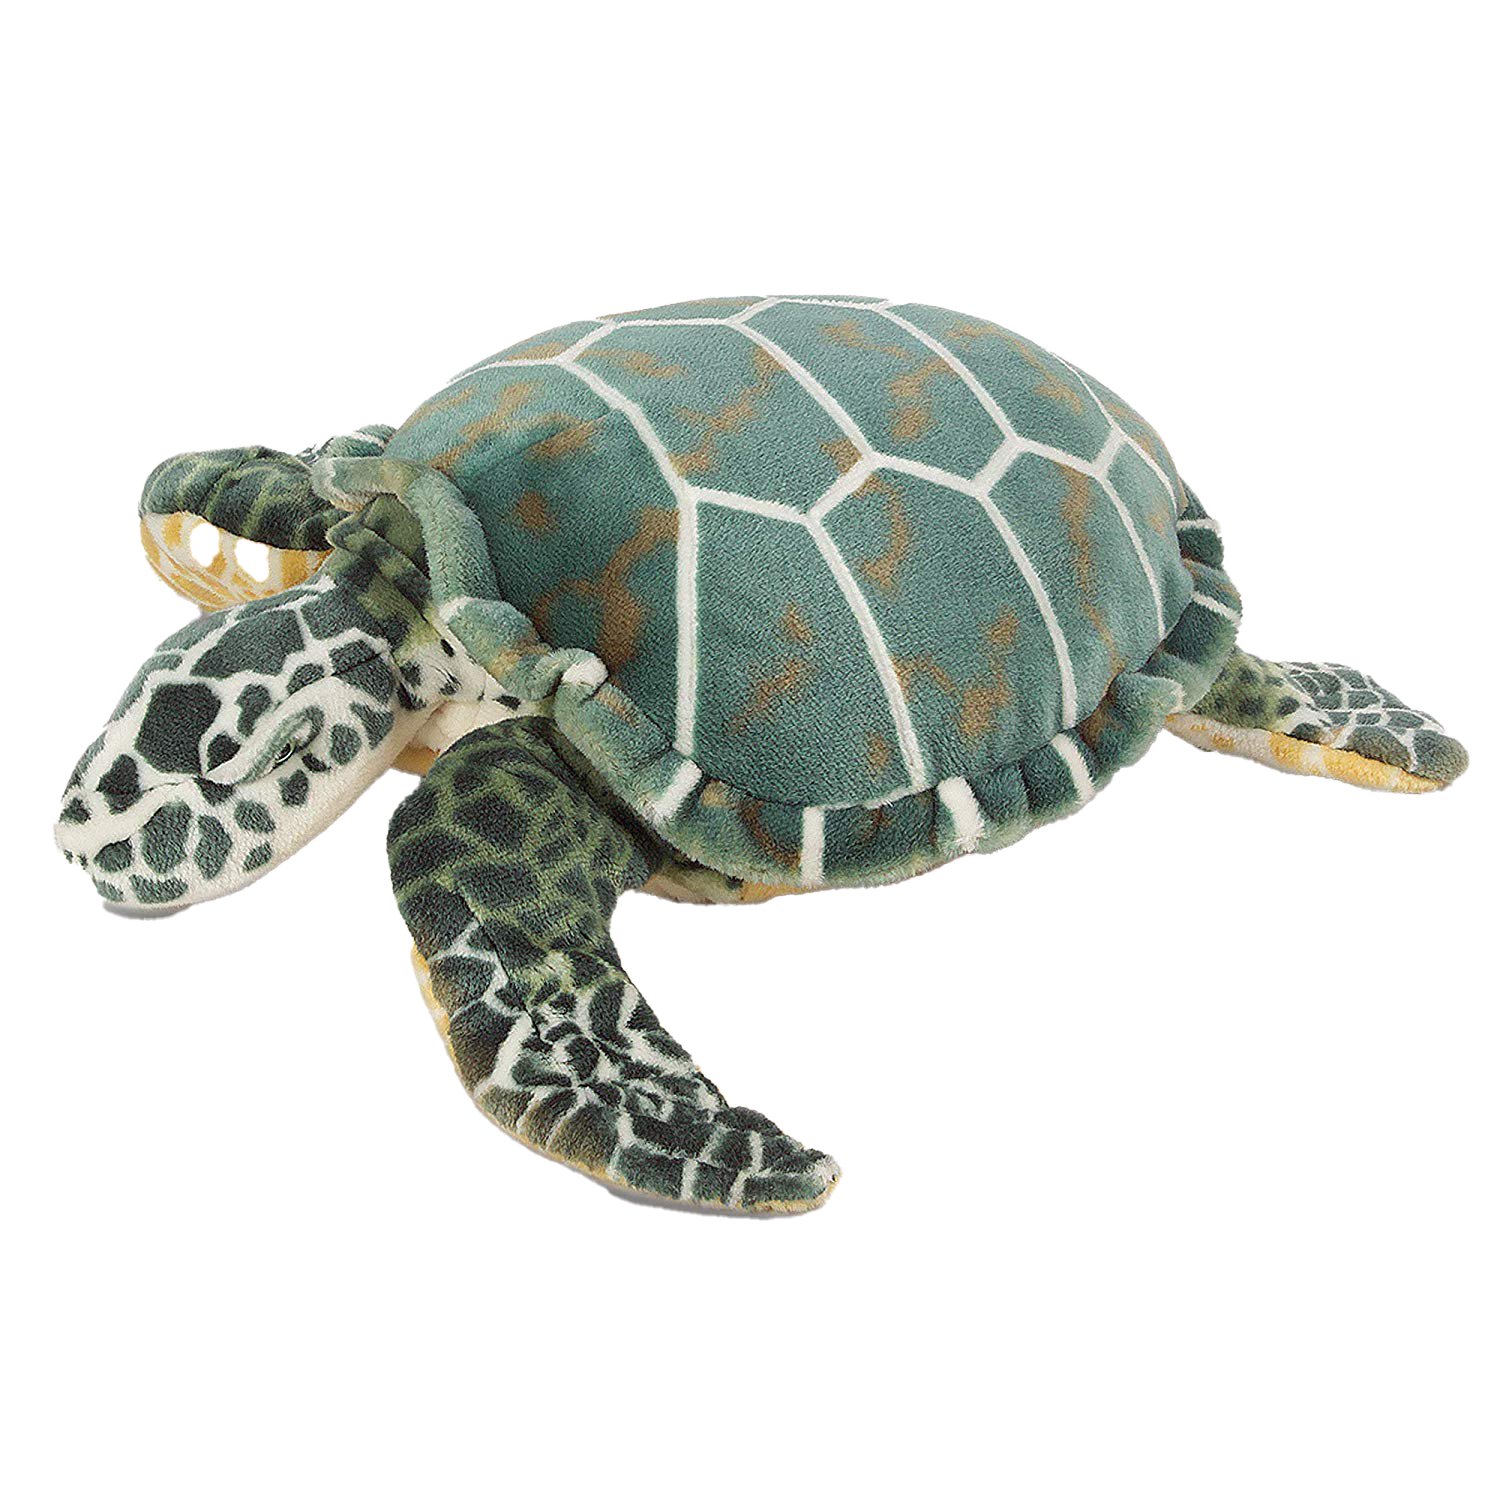 Turtle Transparent Images